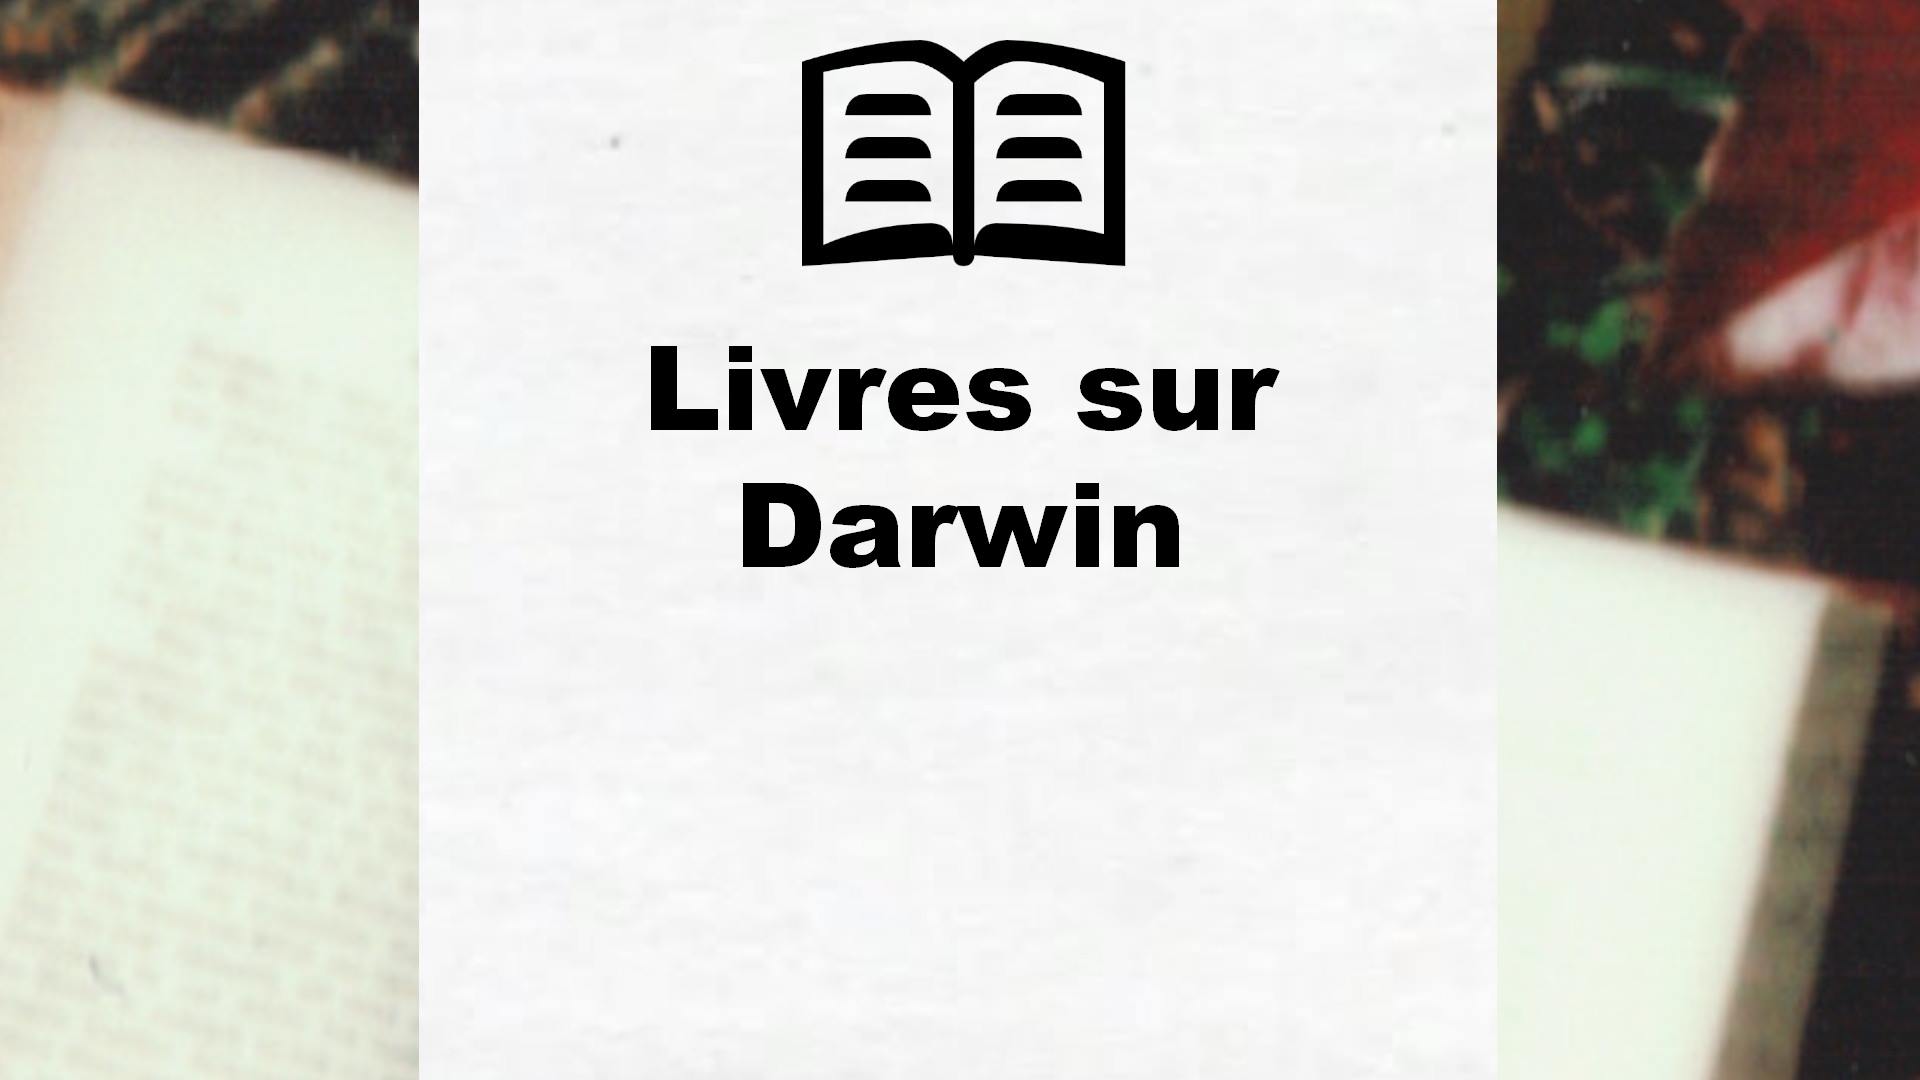 Livres sur Darwin